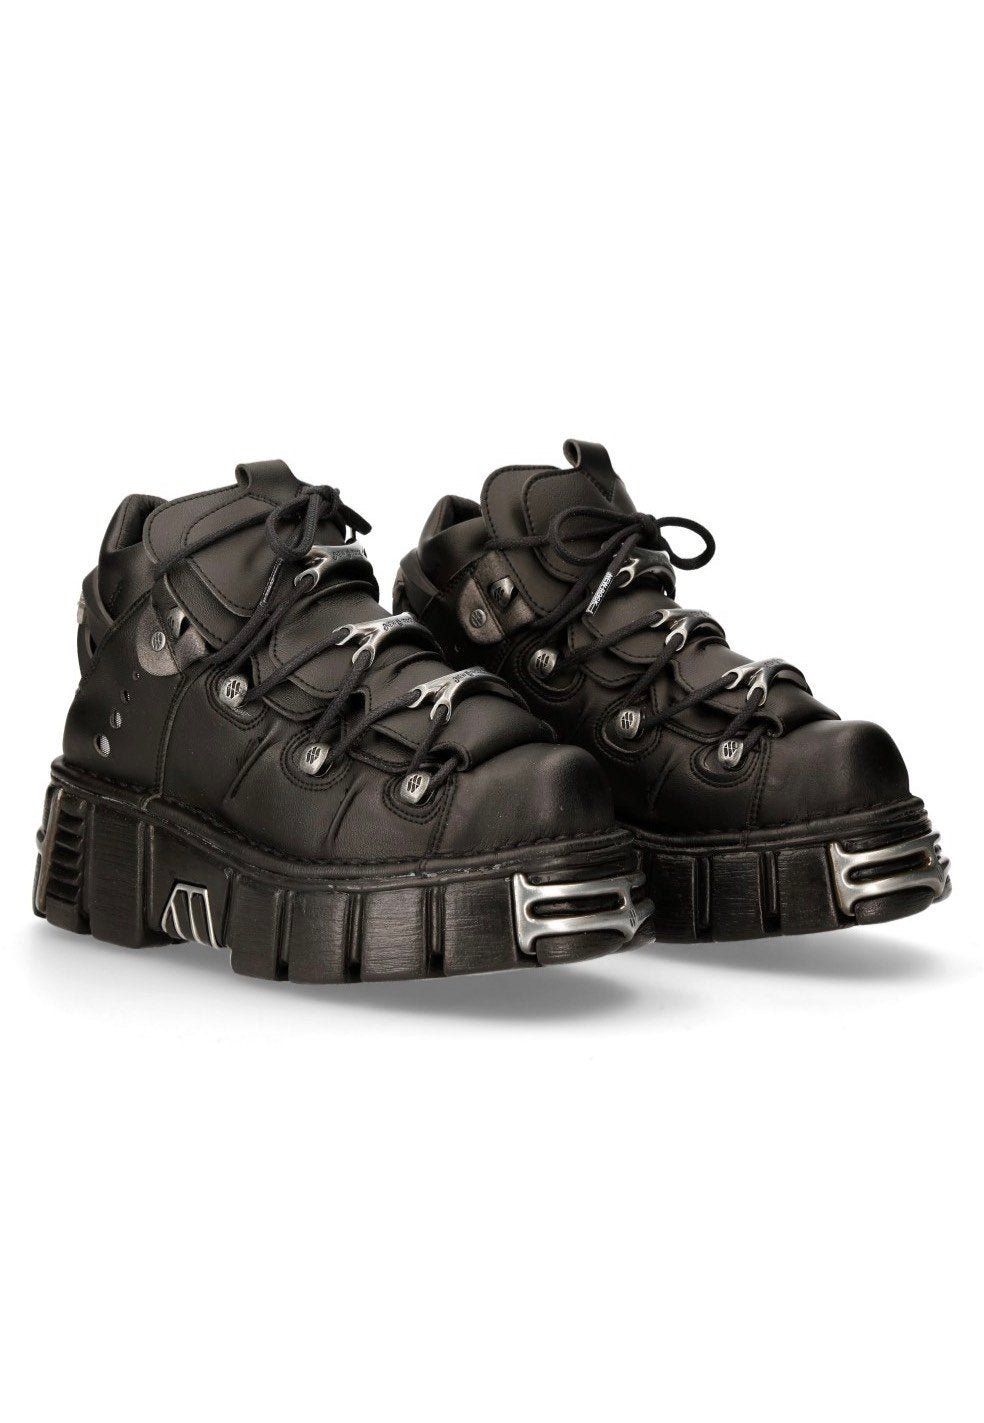 New Rock - 106 VS1 Black - Girl Shoes